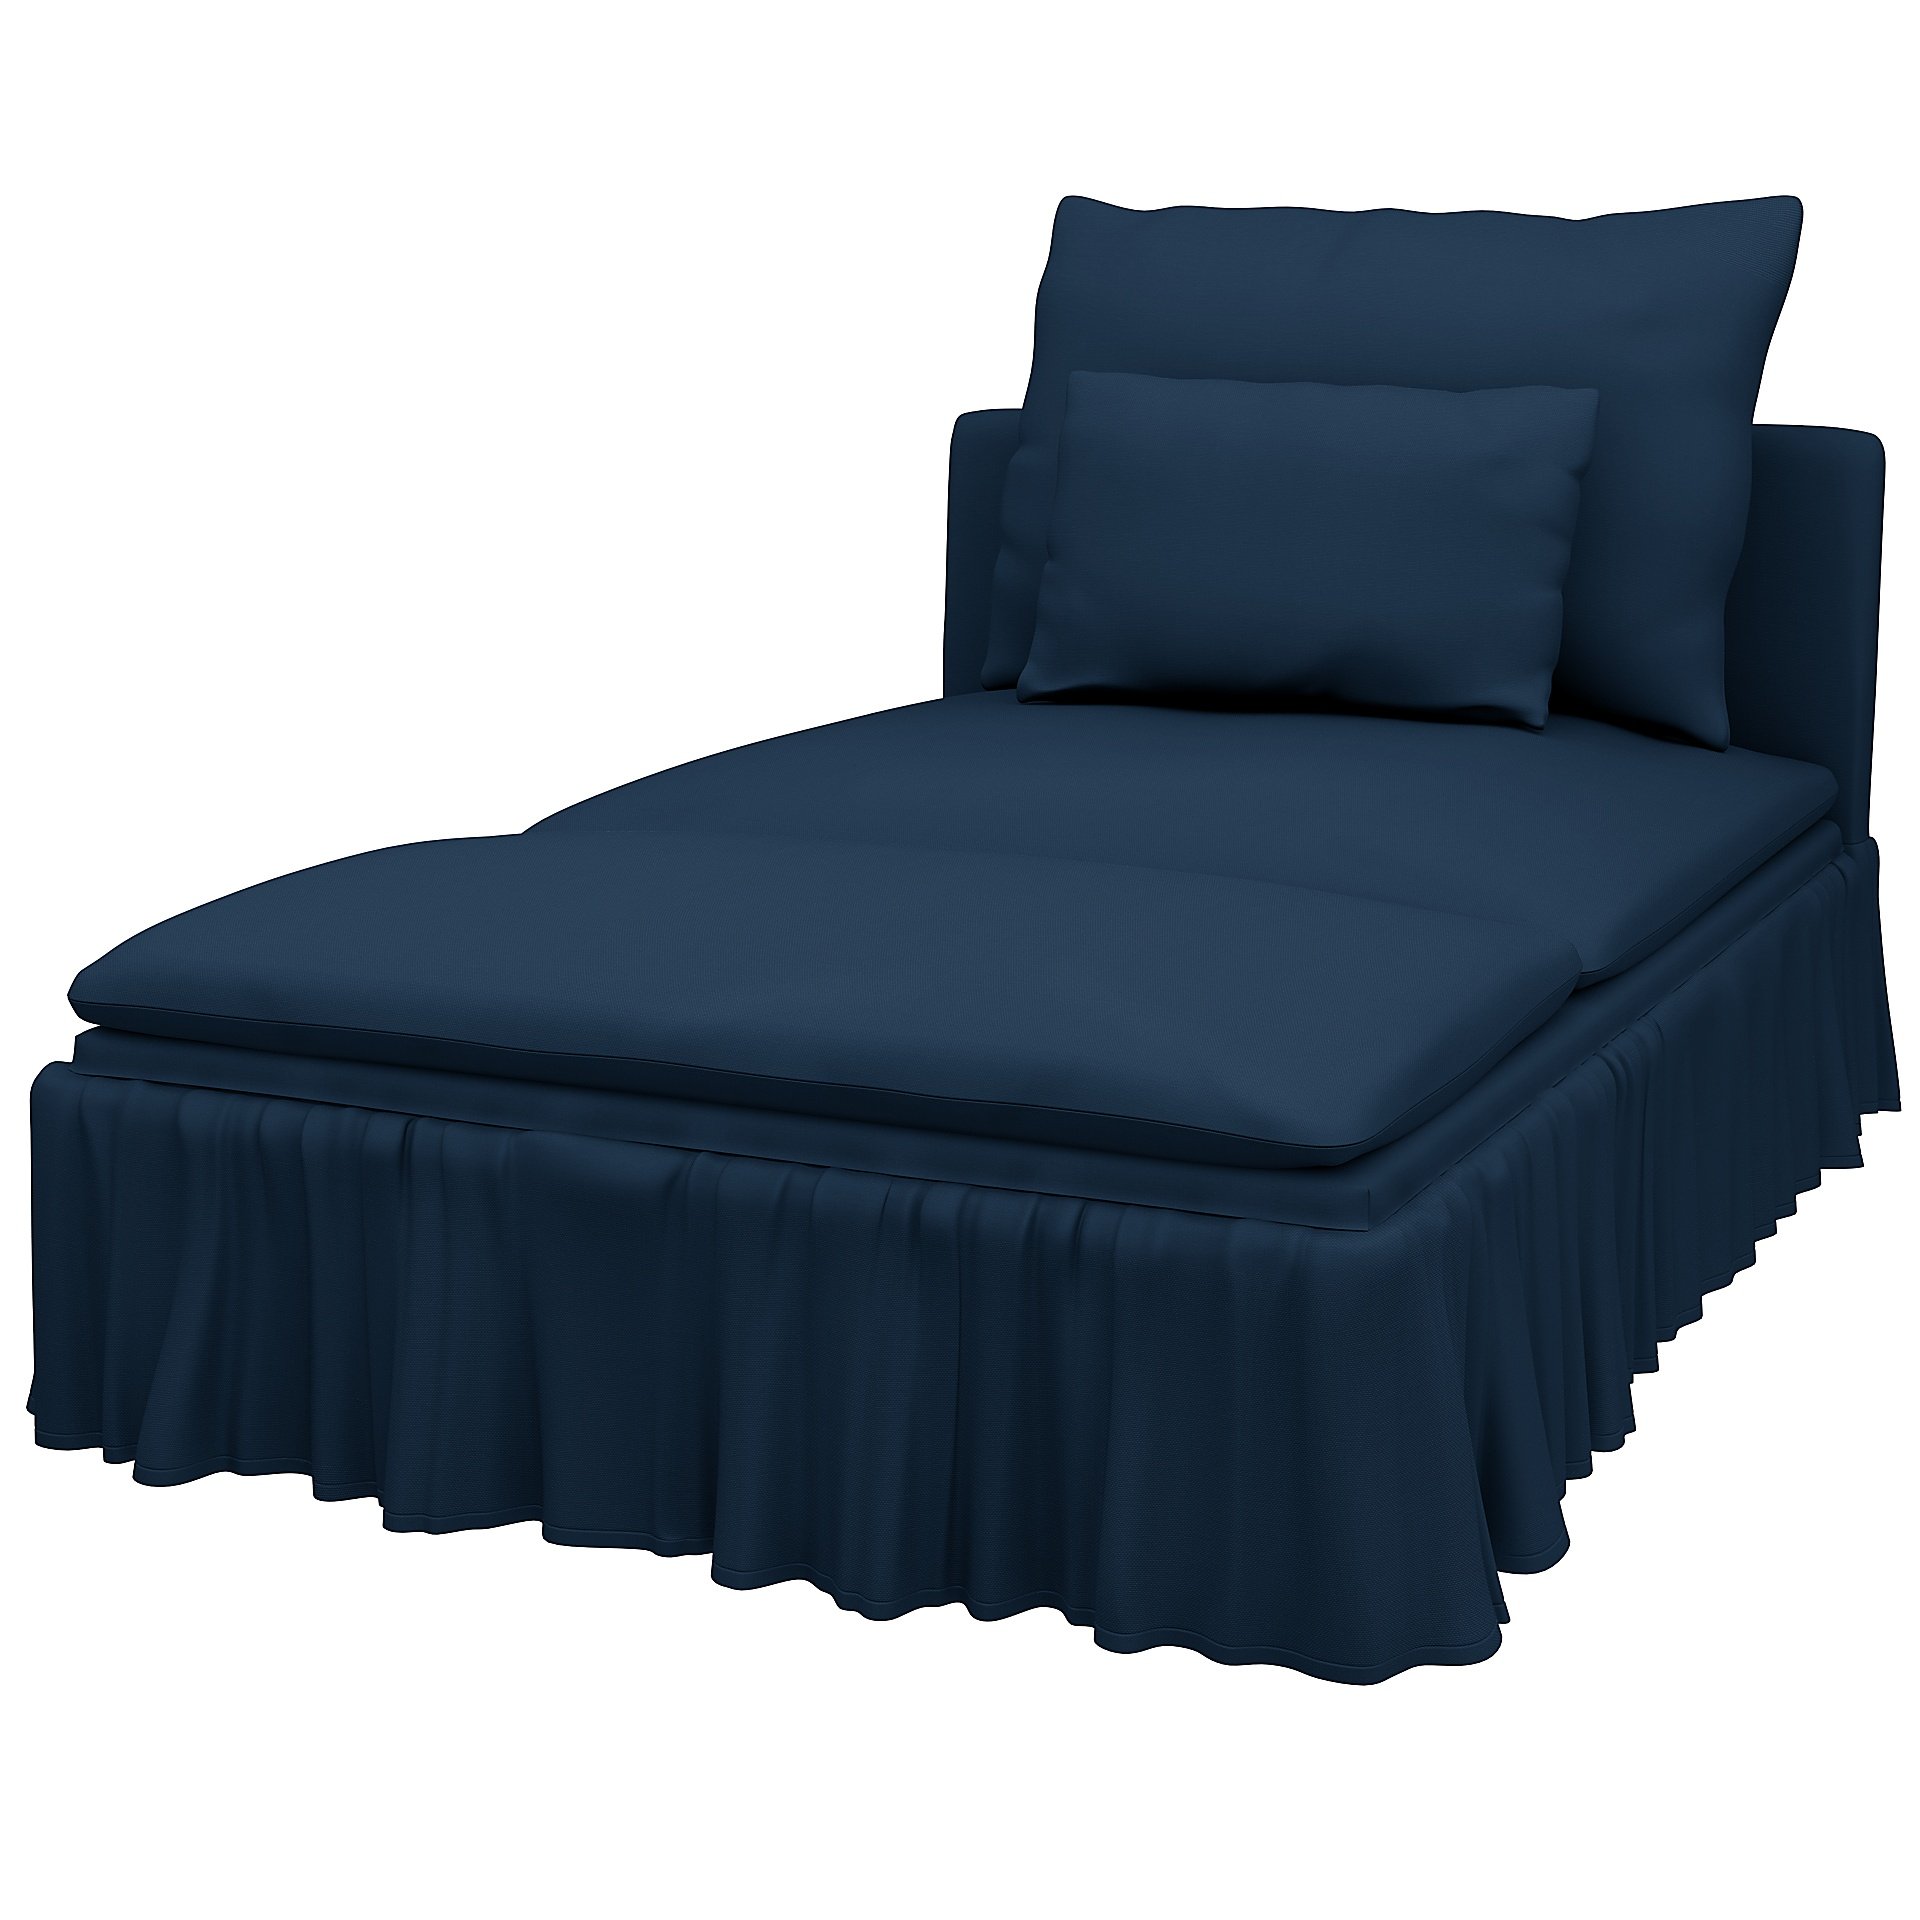 IKEA - Soderhamn chaise longue Maximalist Fit, Deep Navy Blue, Cotton - Bemz